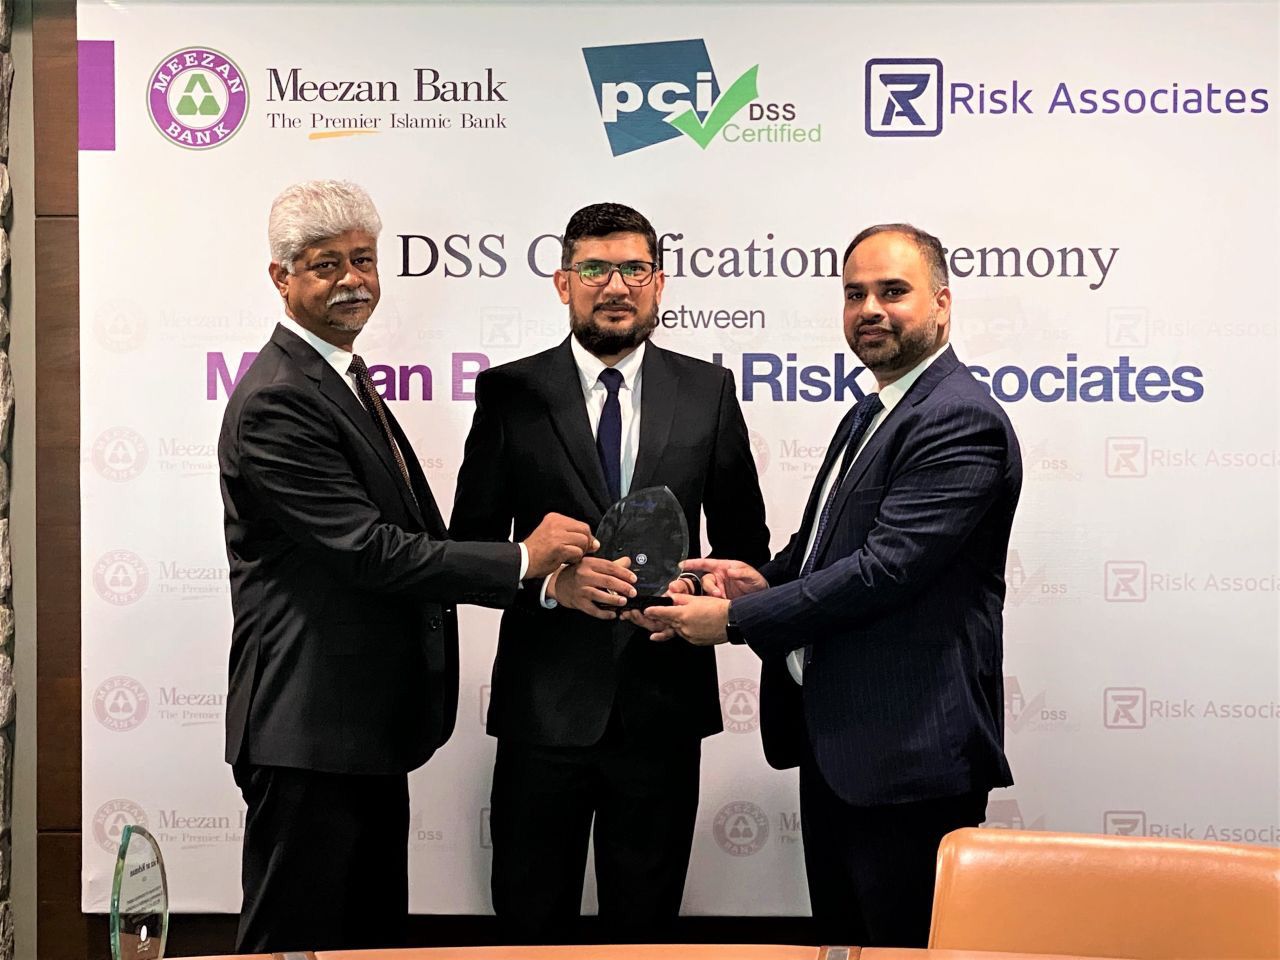 Meezan Bank acquires latest PCI DSS Certification through Risk Associates, meeting stringent security standards